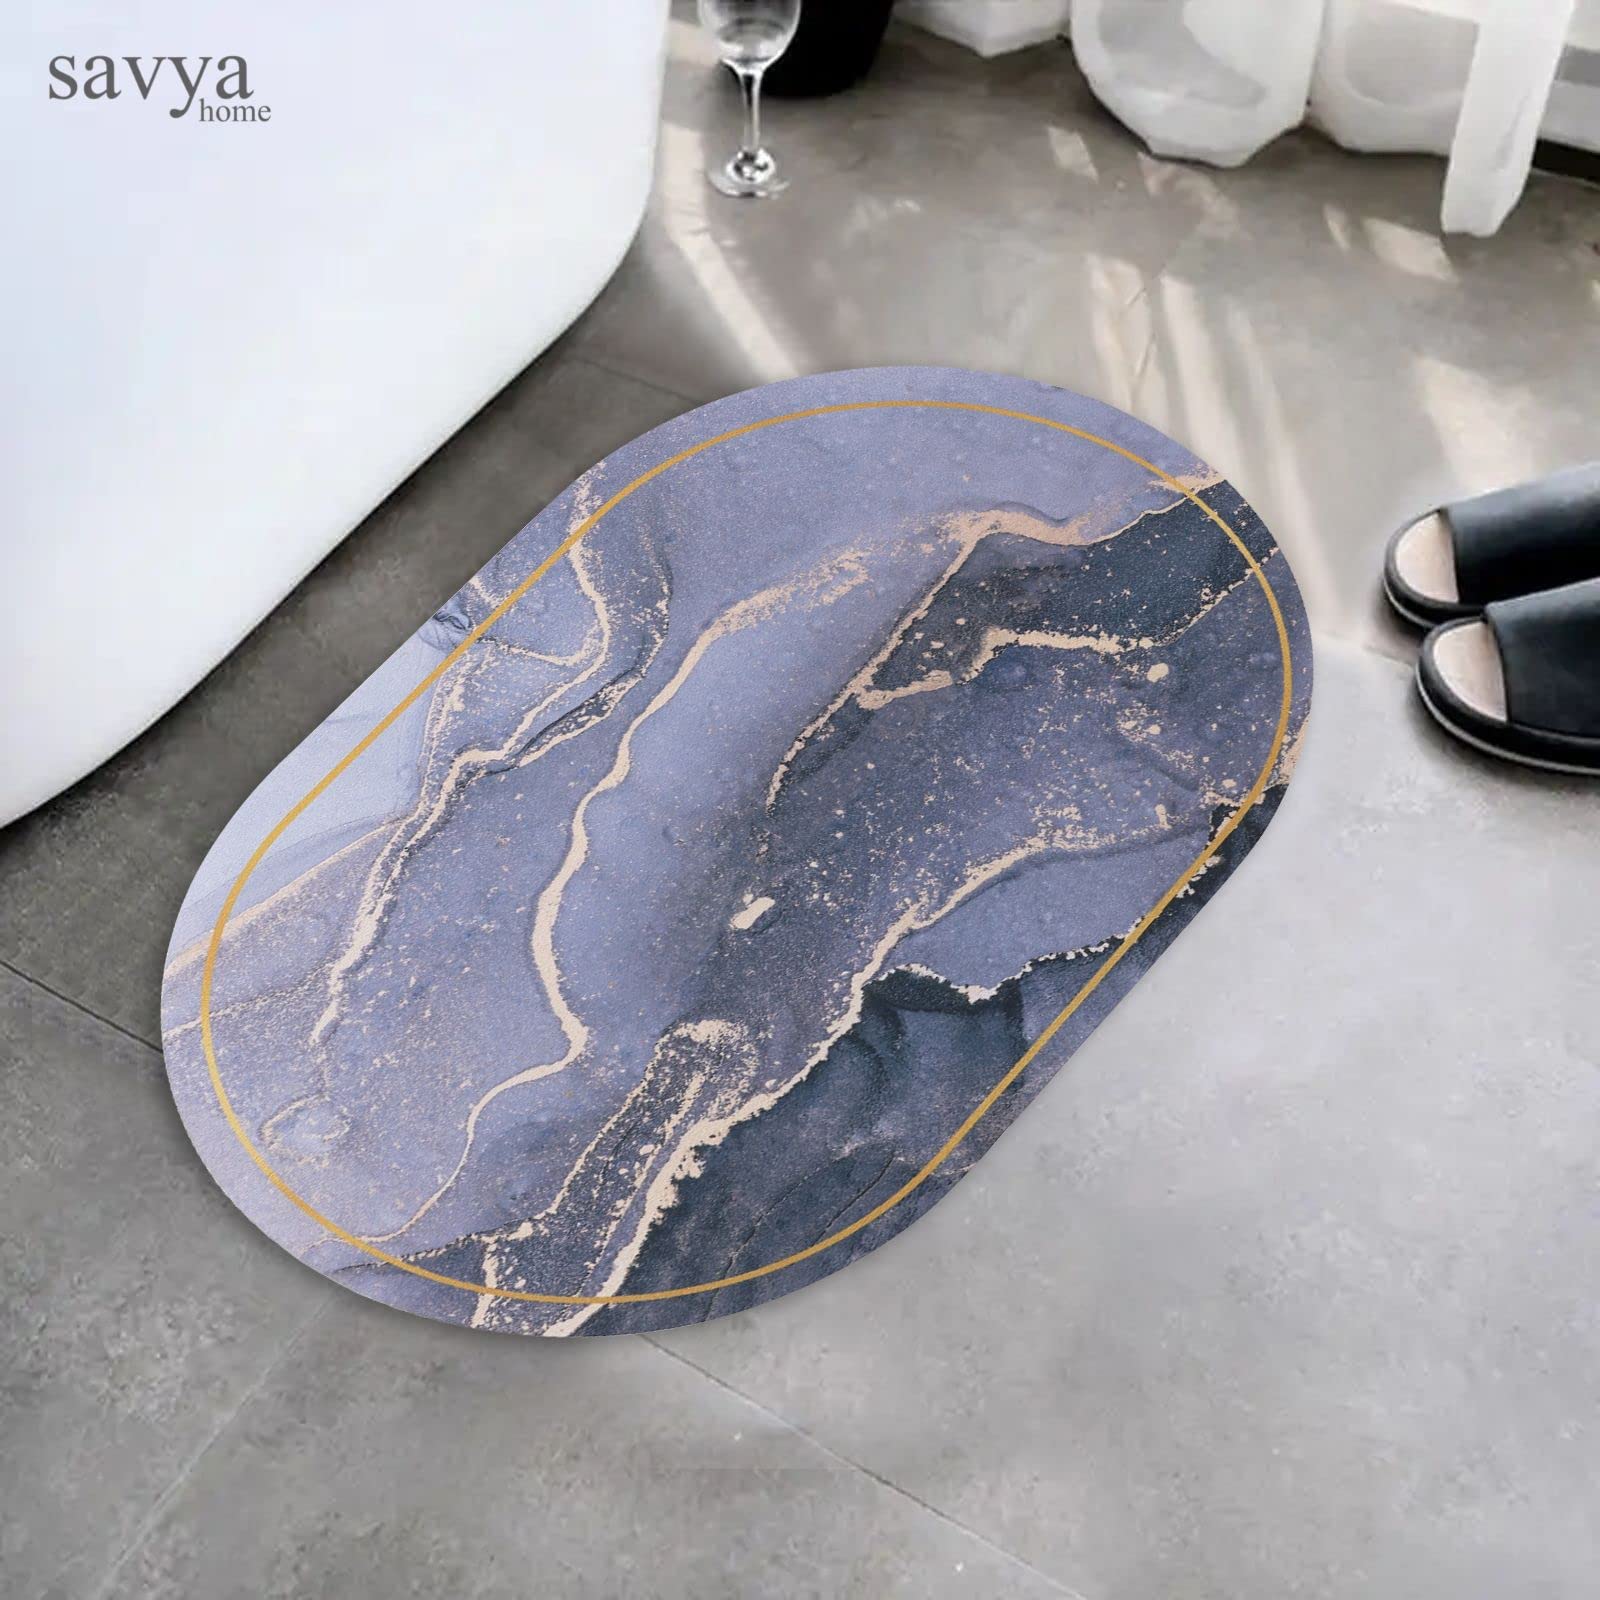 SAVYA HOME Pack of 2 Polypropylene Bathroom Mats|60 x 40cm|Anti-Skid Mat for Living Room, Kitchen, Shower, Bathtub |Multipurpose Mat(Metallic)